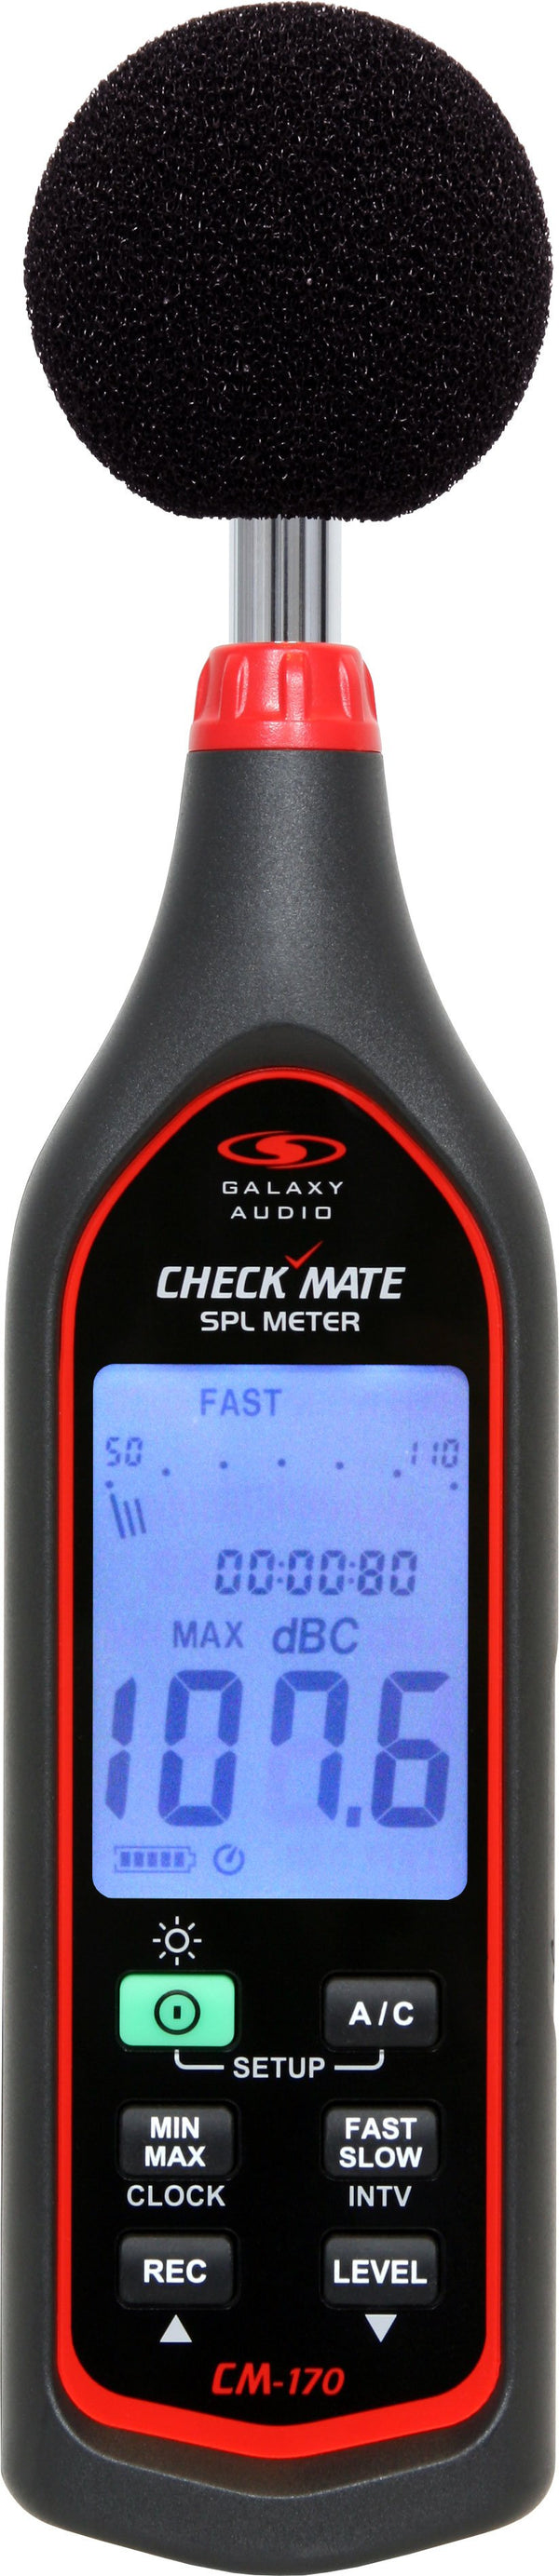 Galaxy Audio Check Mate Type II SPL Sound Level Meter w/ Software - CM-170